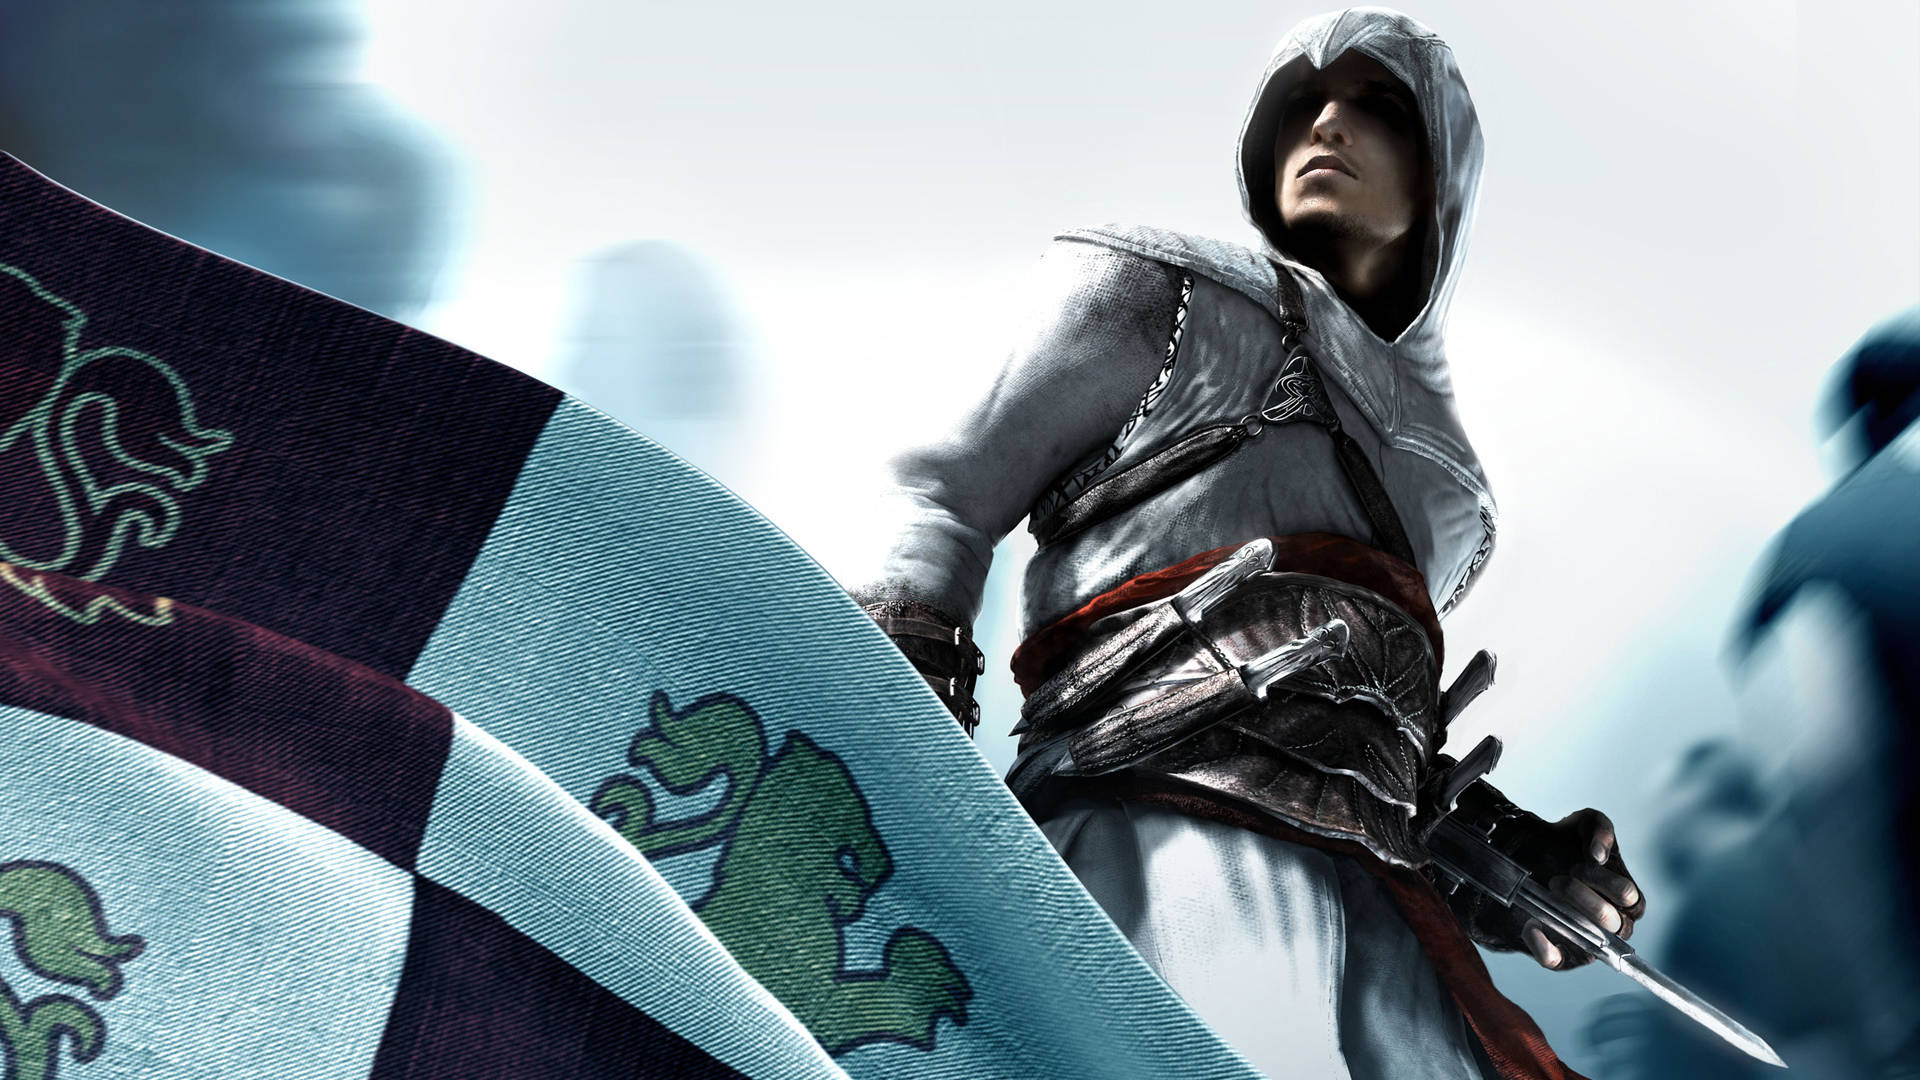 Assassin's Creed Hd Graphics Wallpaper